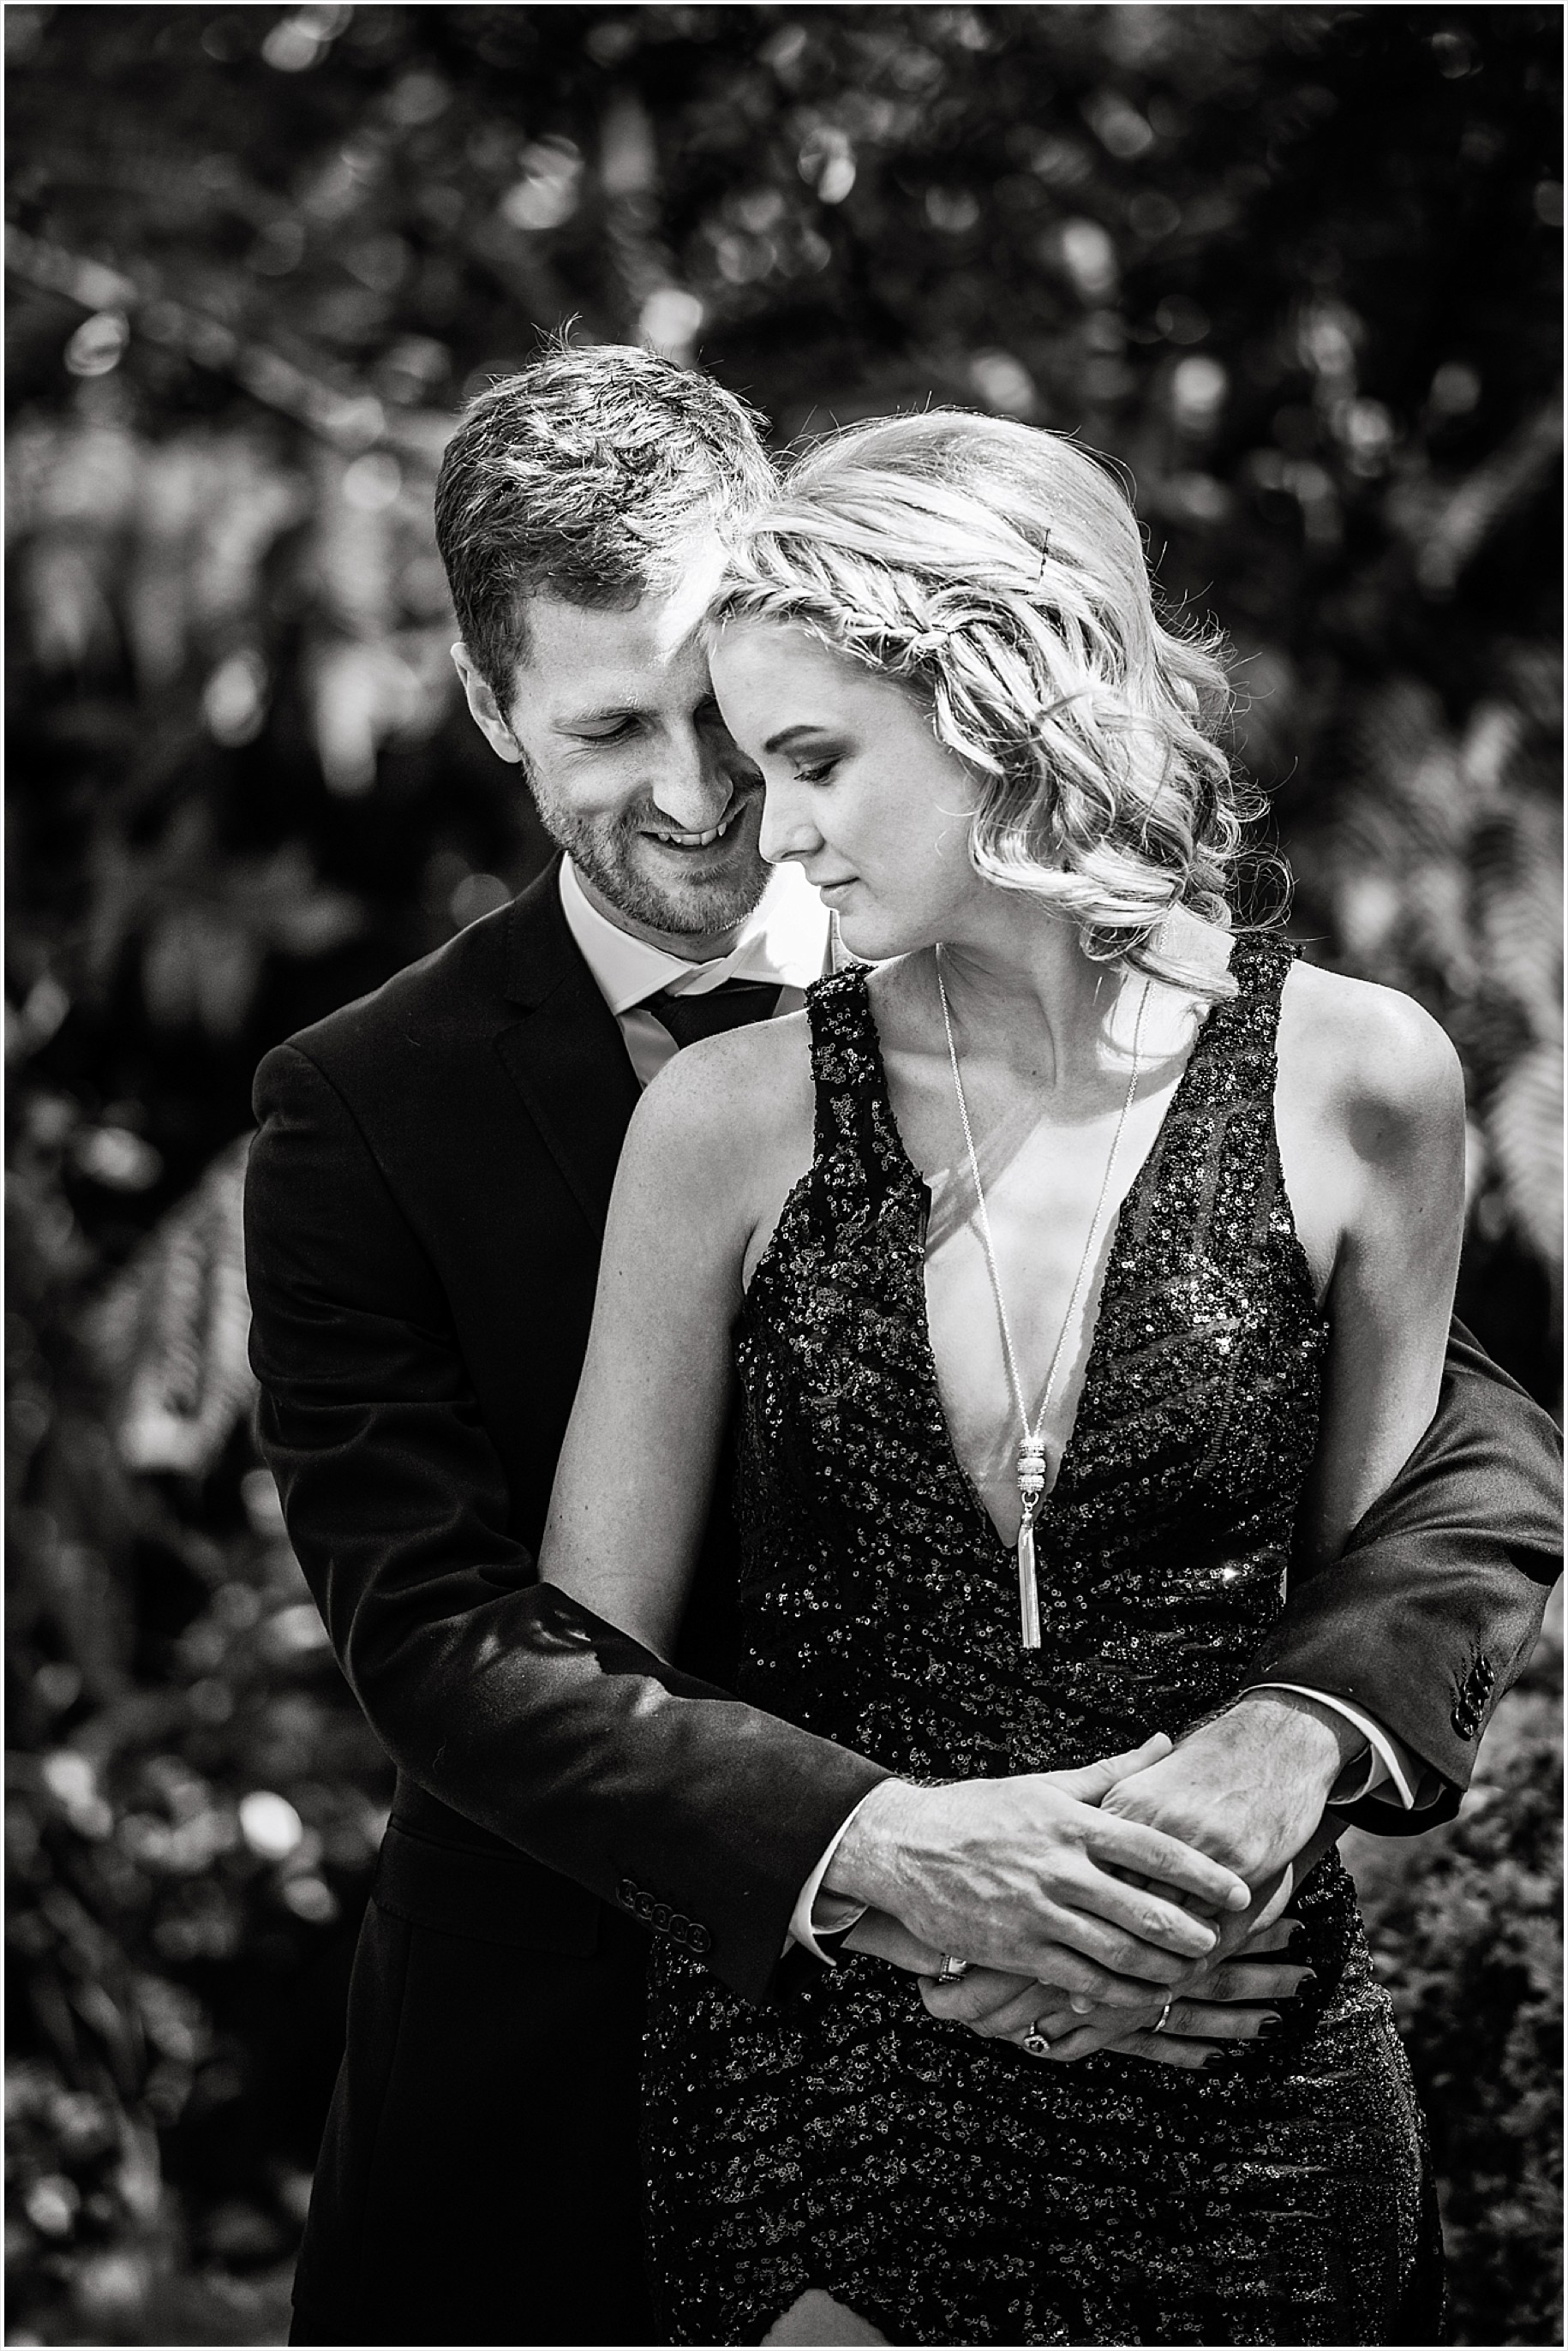 https://jadenorwood.com/wp-content/uploads/2014/11/11-7278-post/sexy-luxury-engagement-couple-photos_005.jpg